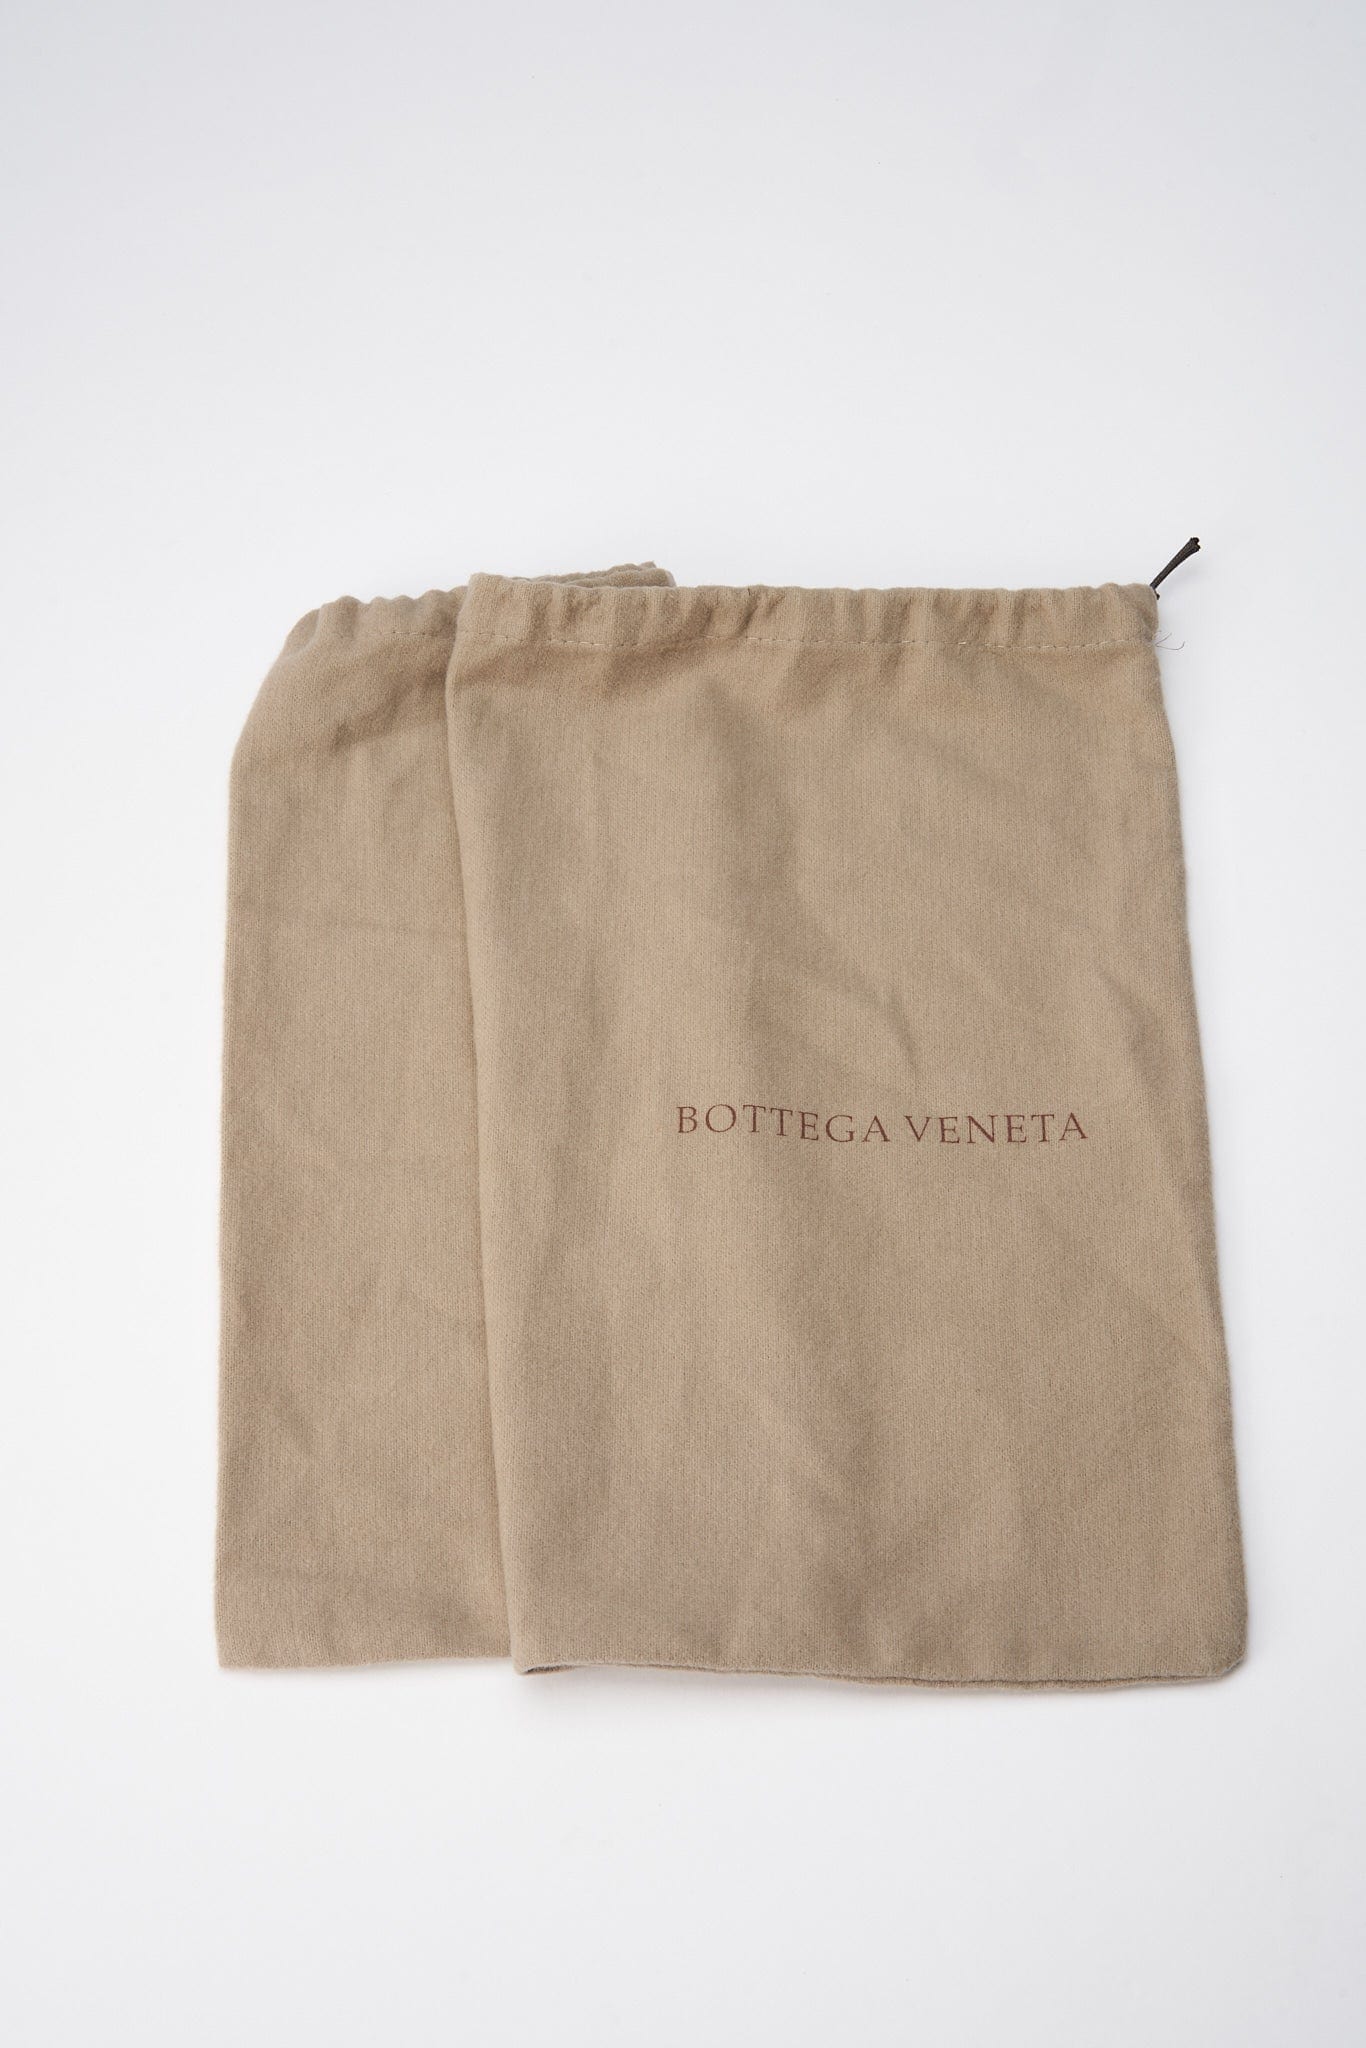 Bottega Veneta Intrecciato Leather Clutch Bag - Black – The Hosta